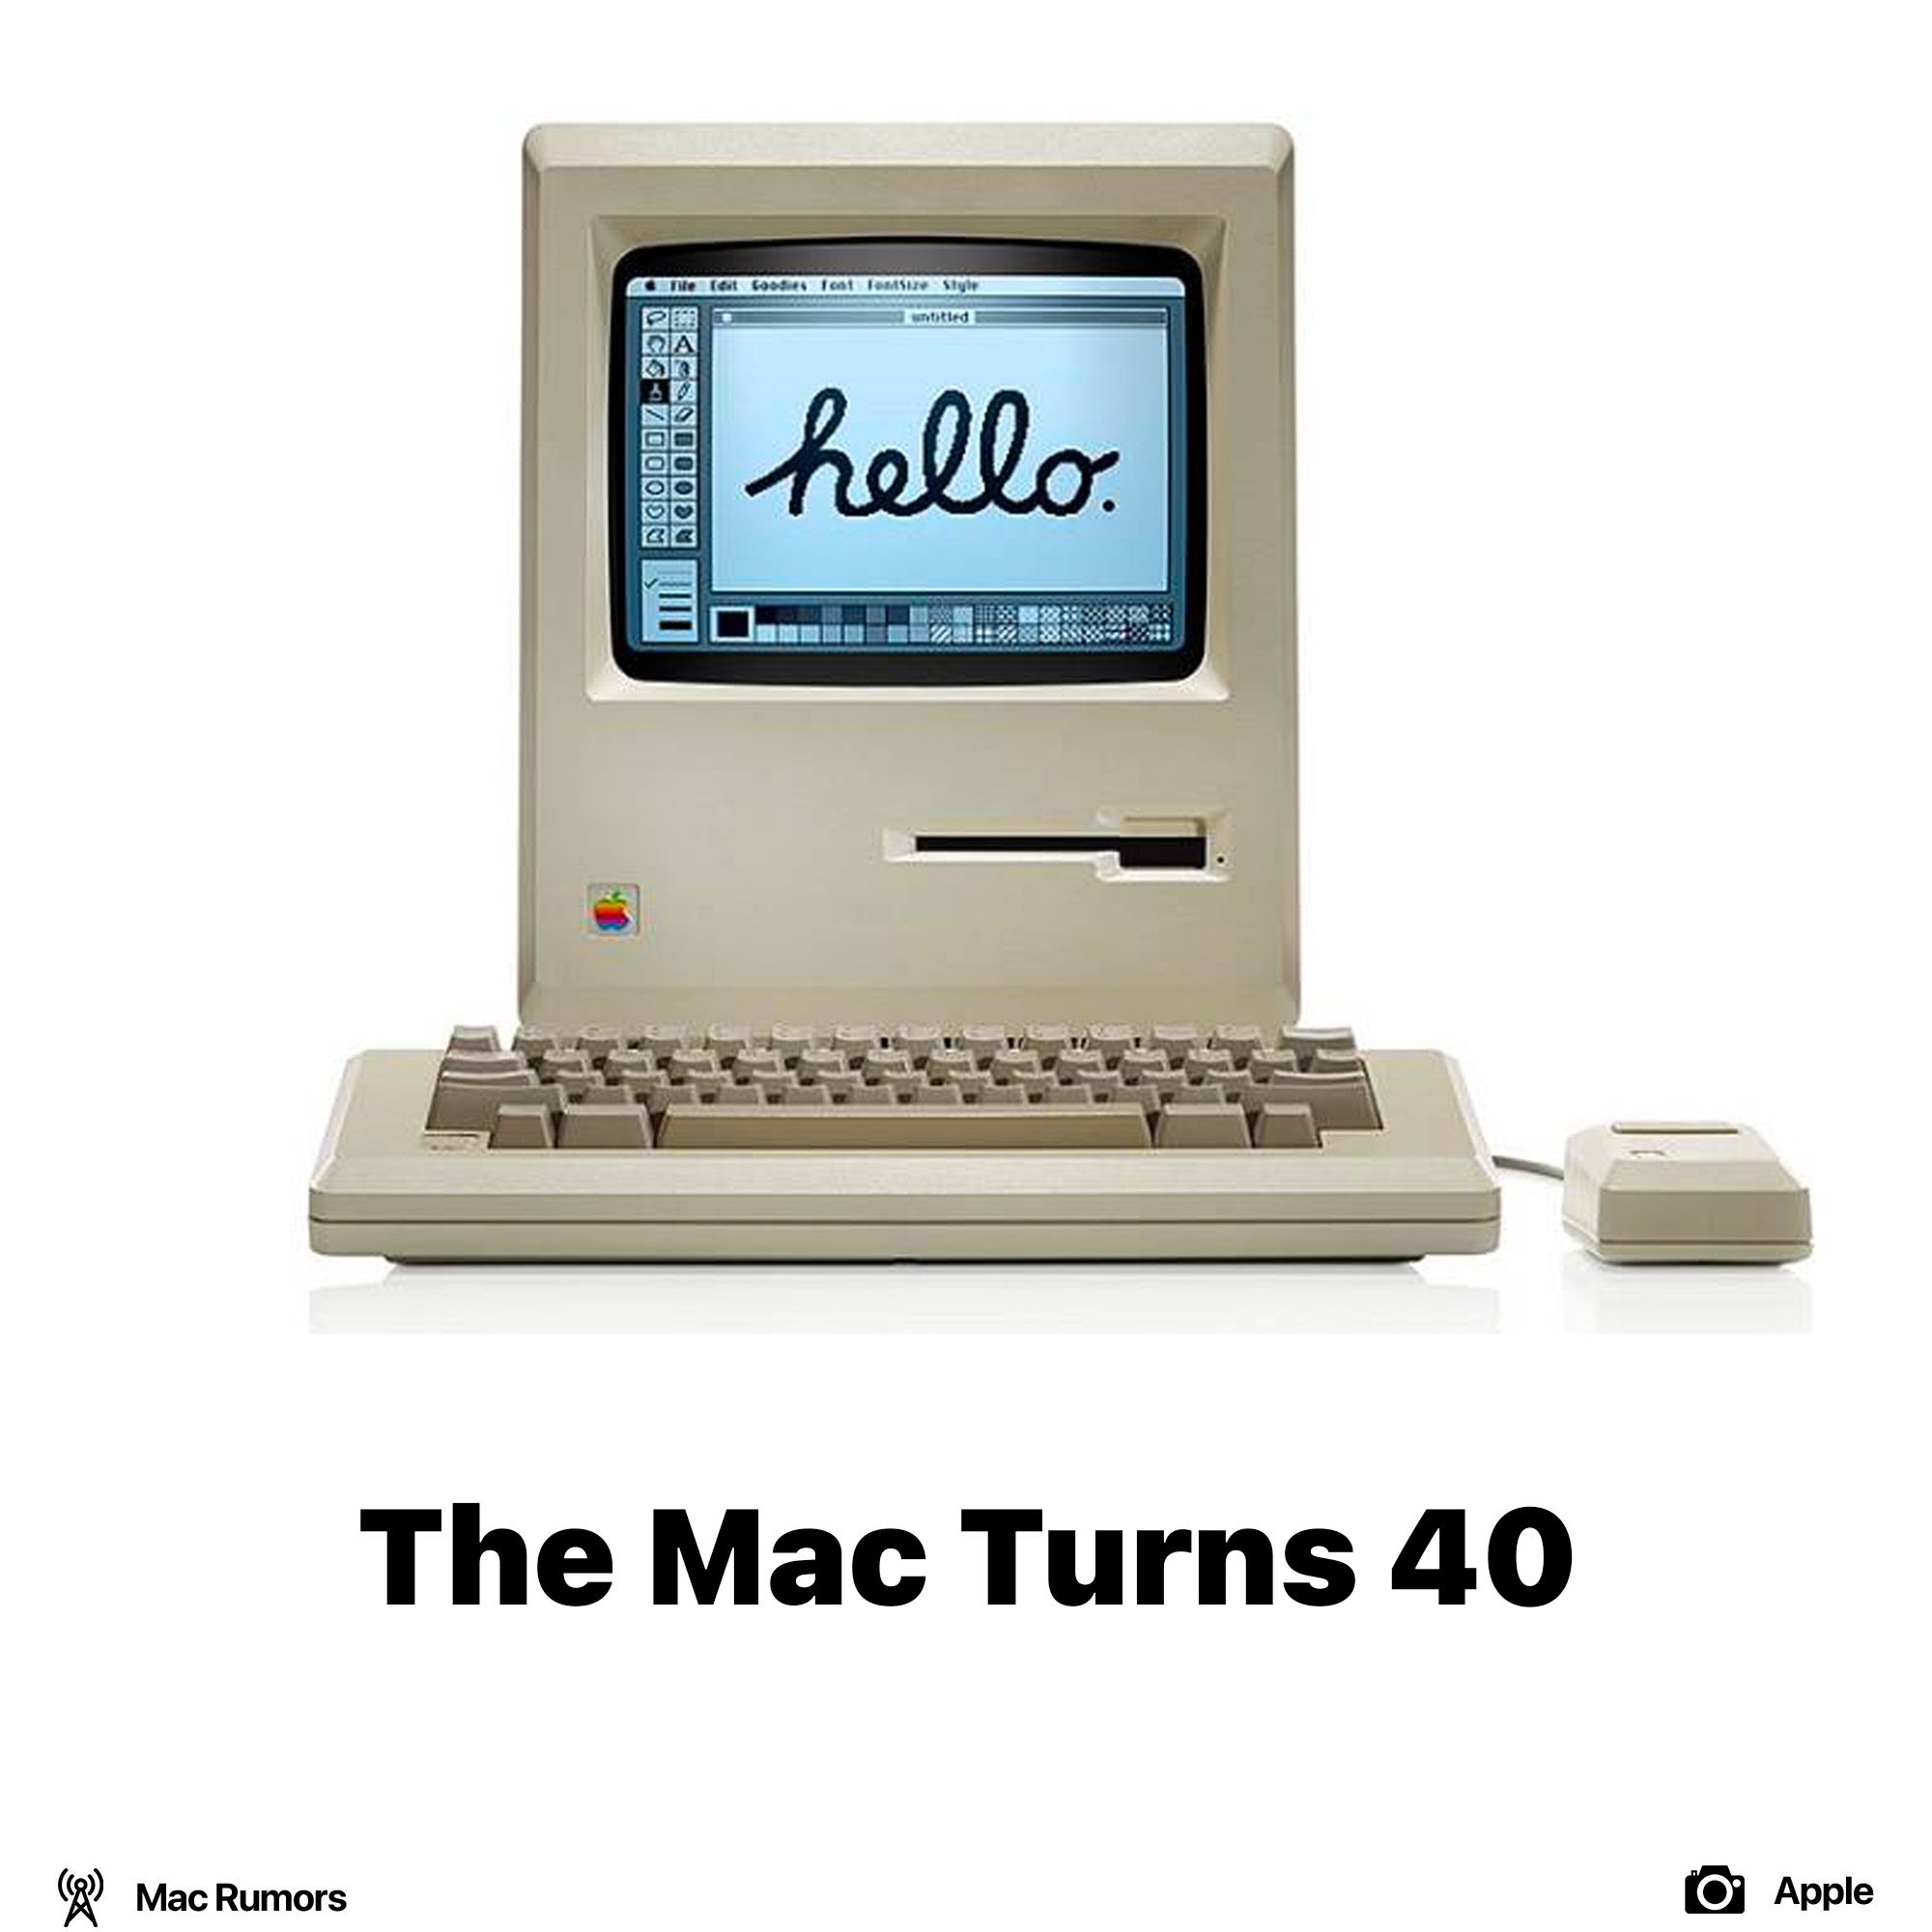 The Mac turns 40